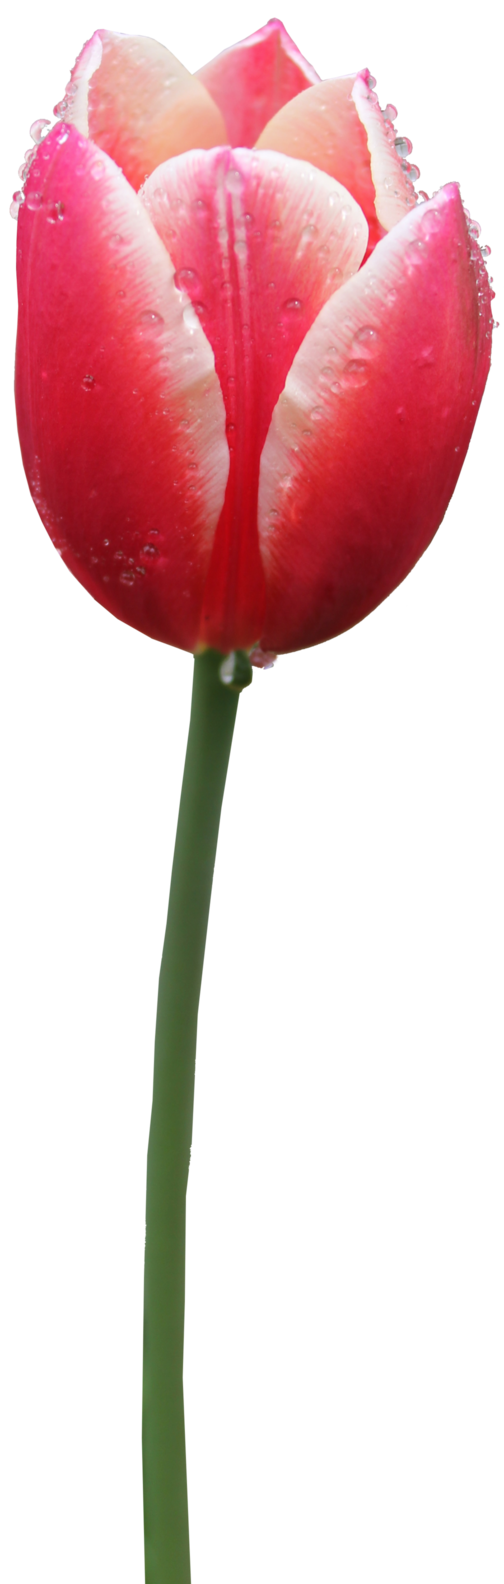 Bunga tulp